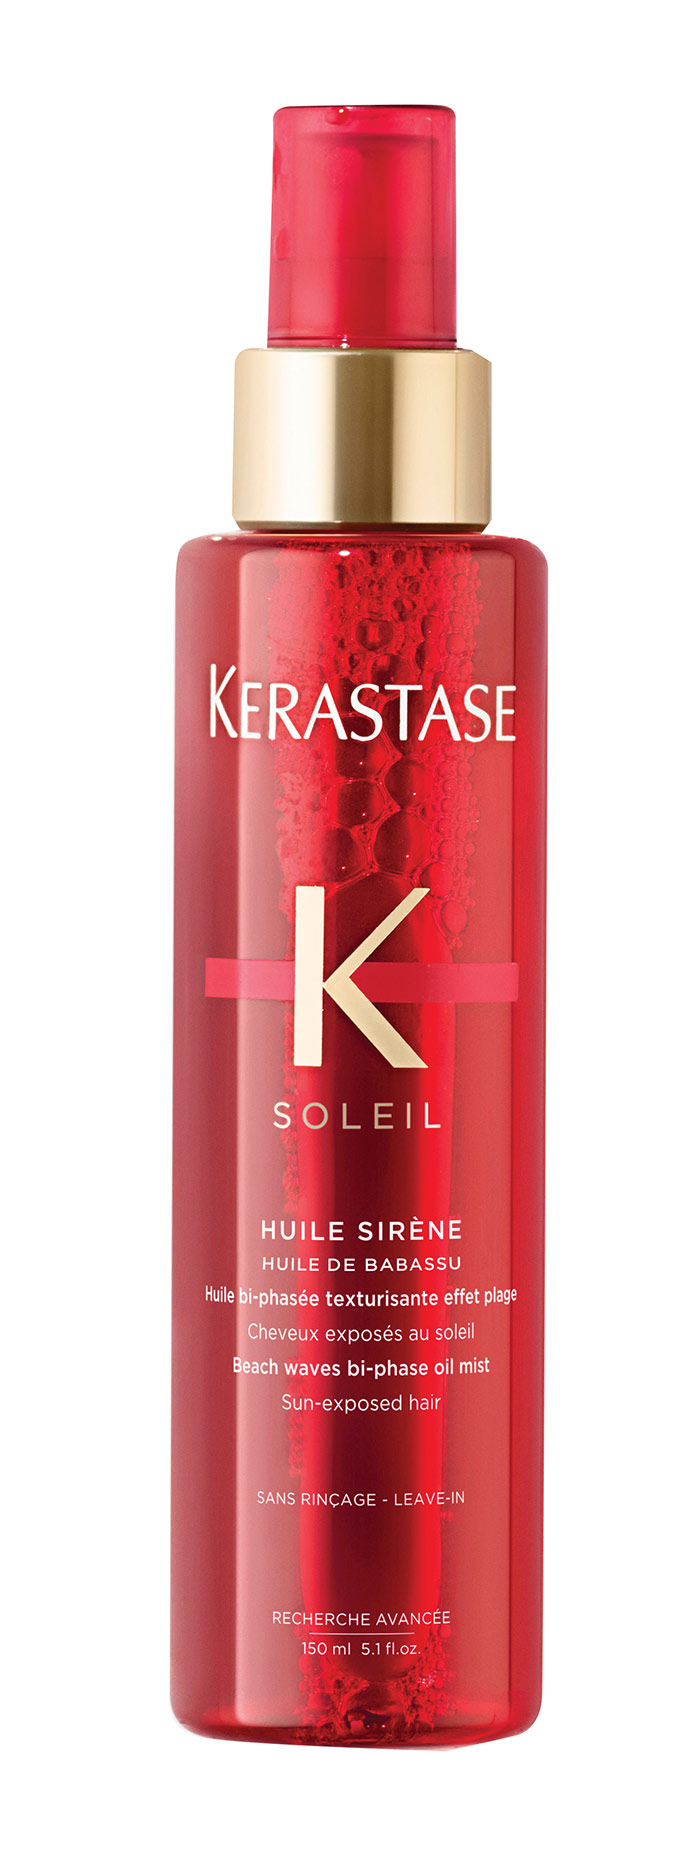 Image of Kerataseu bottle